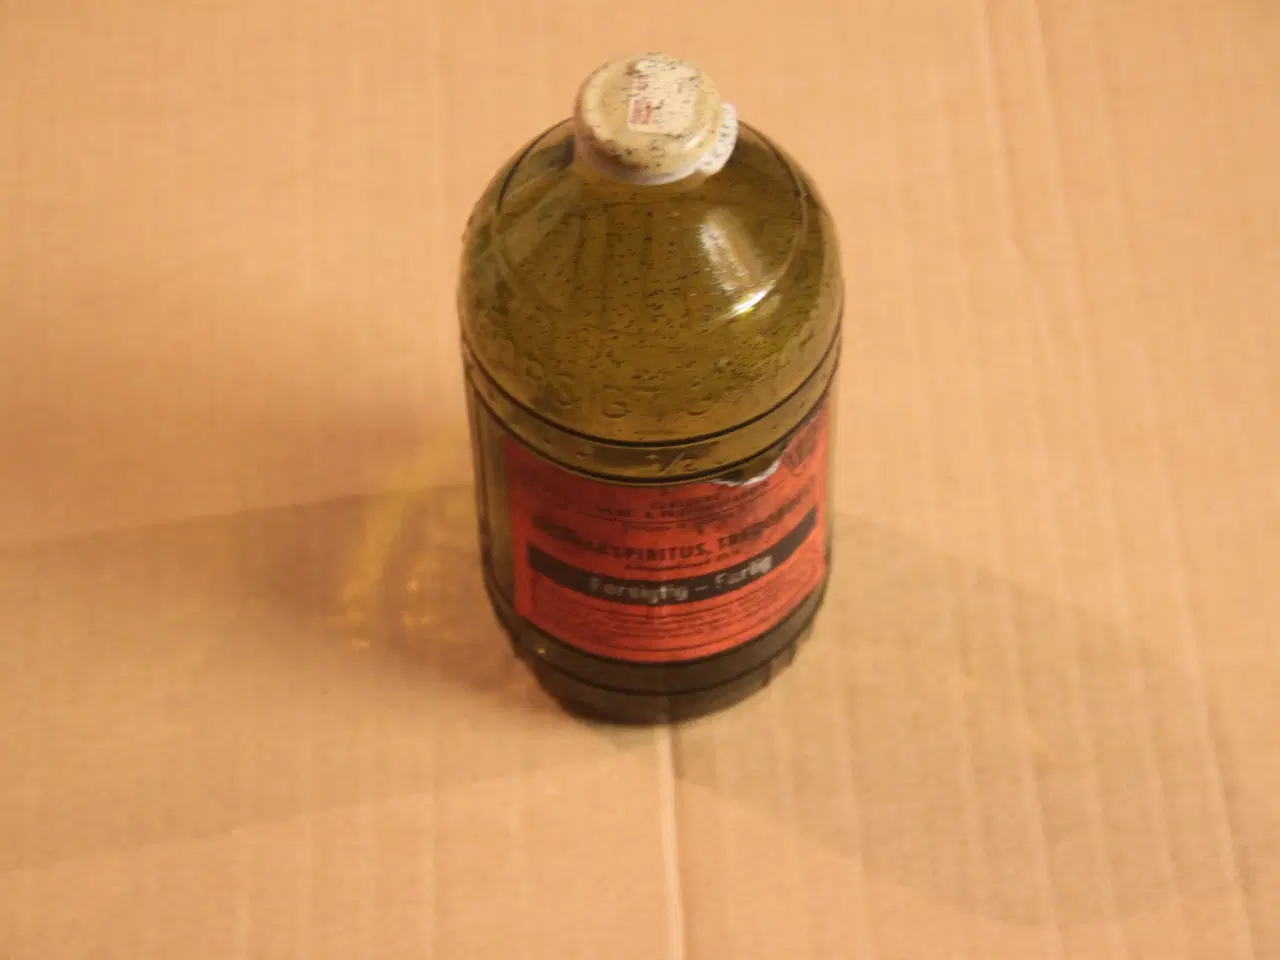 Billede 1 - Gammel glasflaske - salmiakspiritus